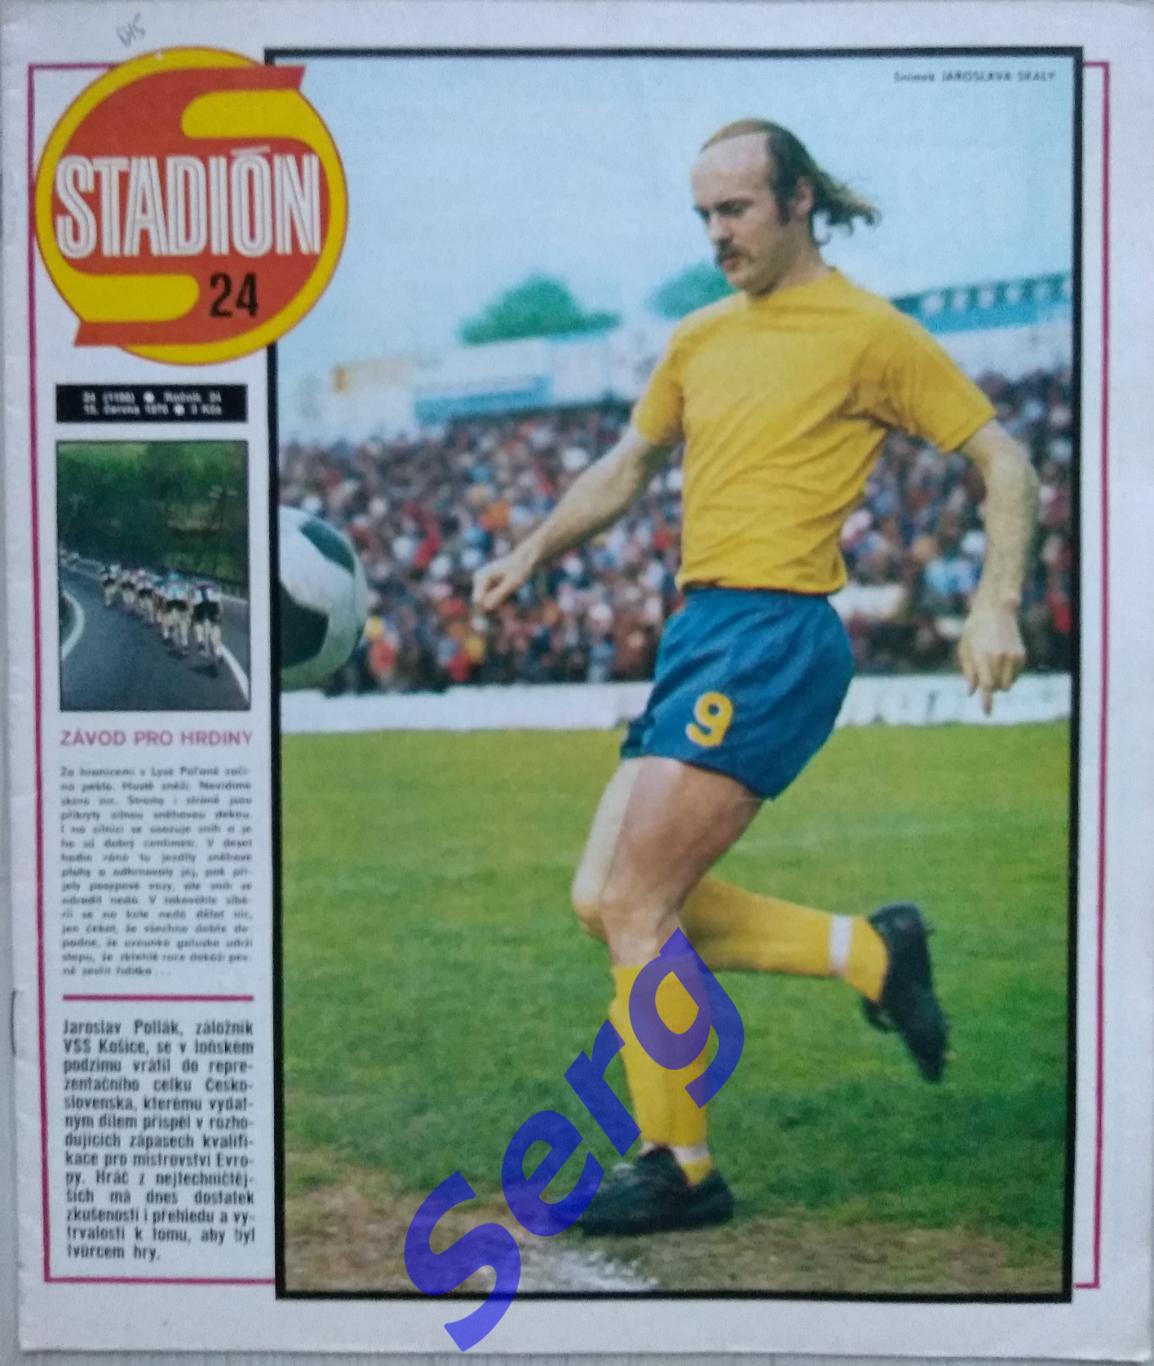 Журнал Стадион (Stadion) №24 1976 год